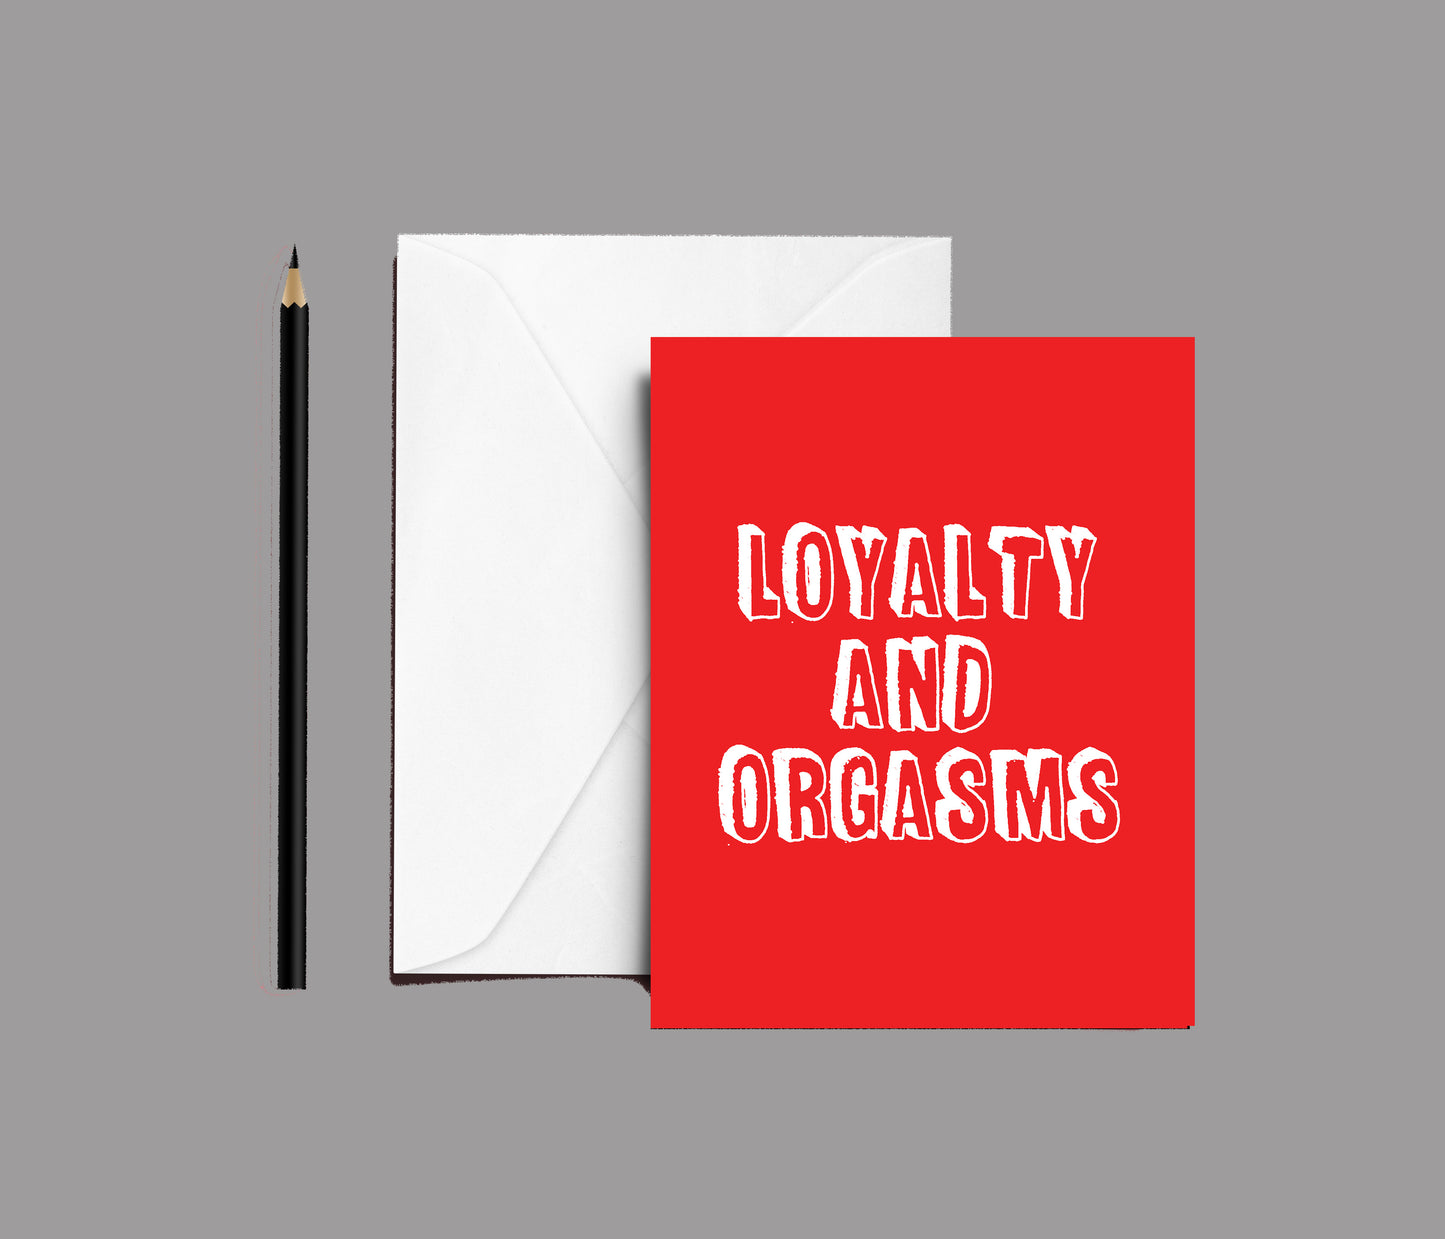 Loyalty and Orgasms